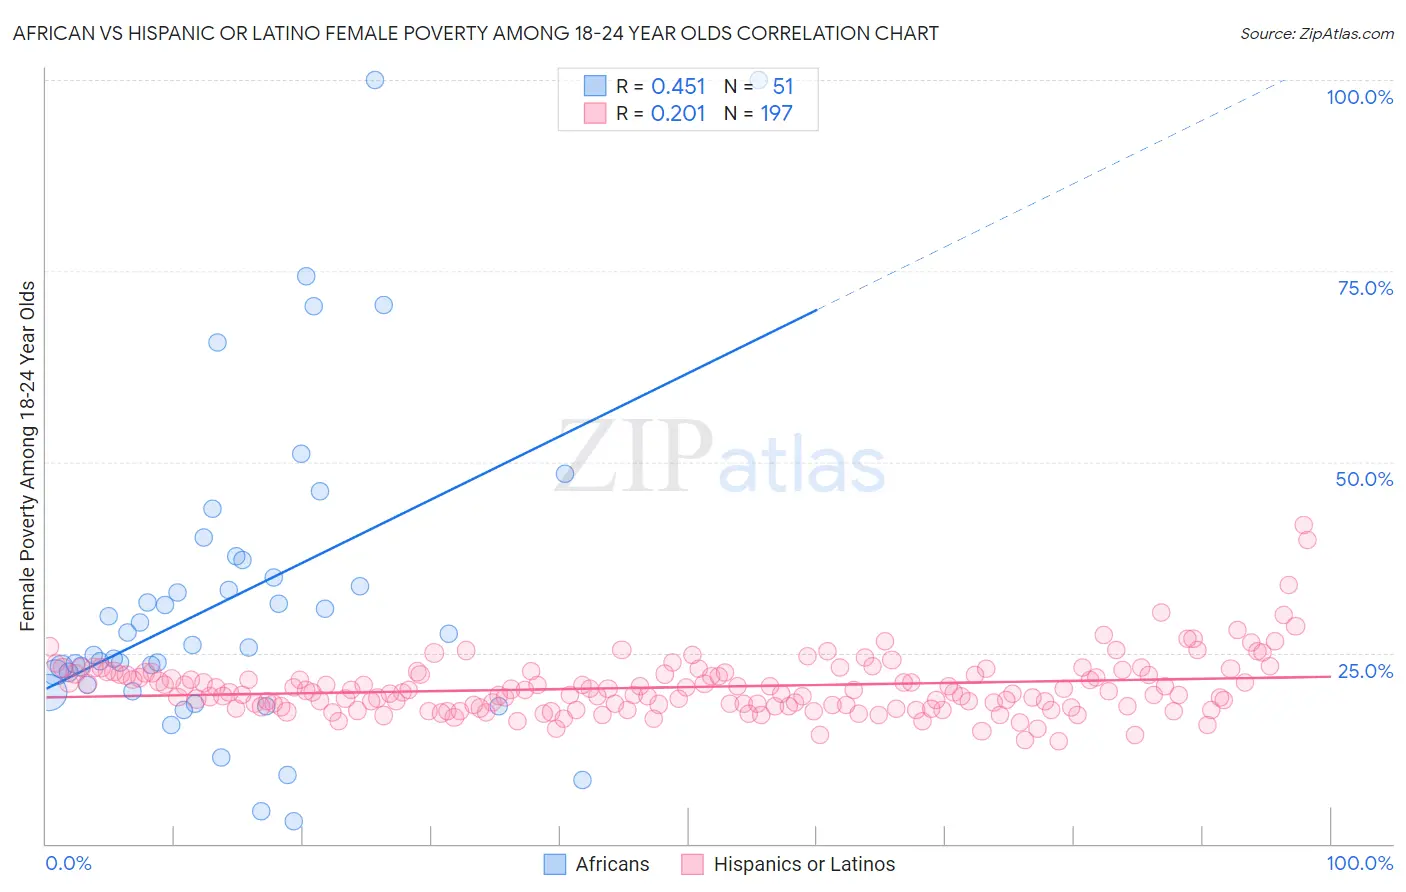 African vs Hispanic or Latino Female Poverty Among 18-24 Year Olds